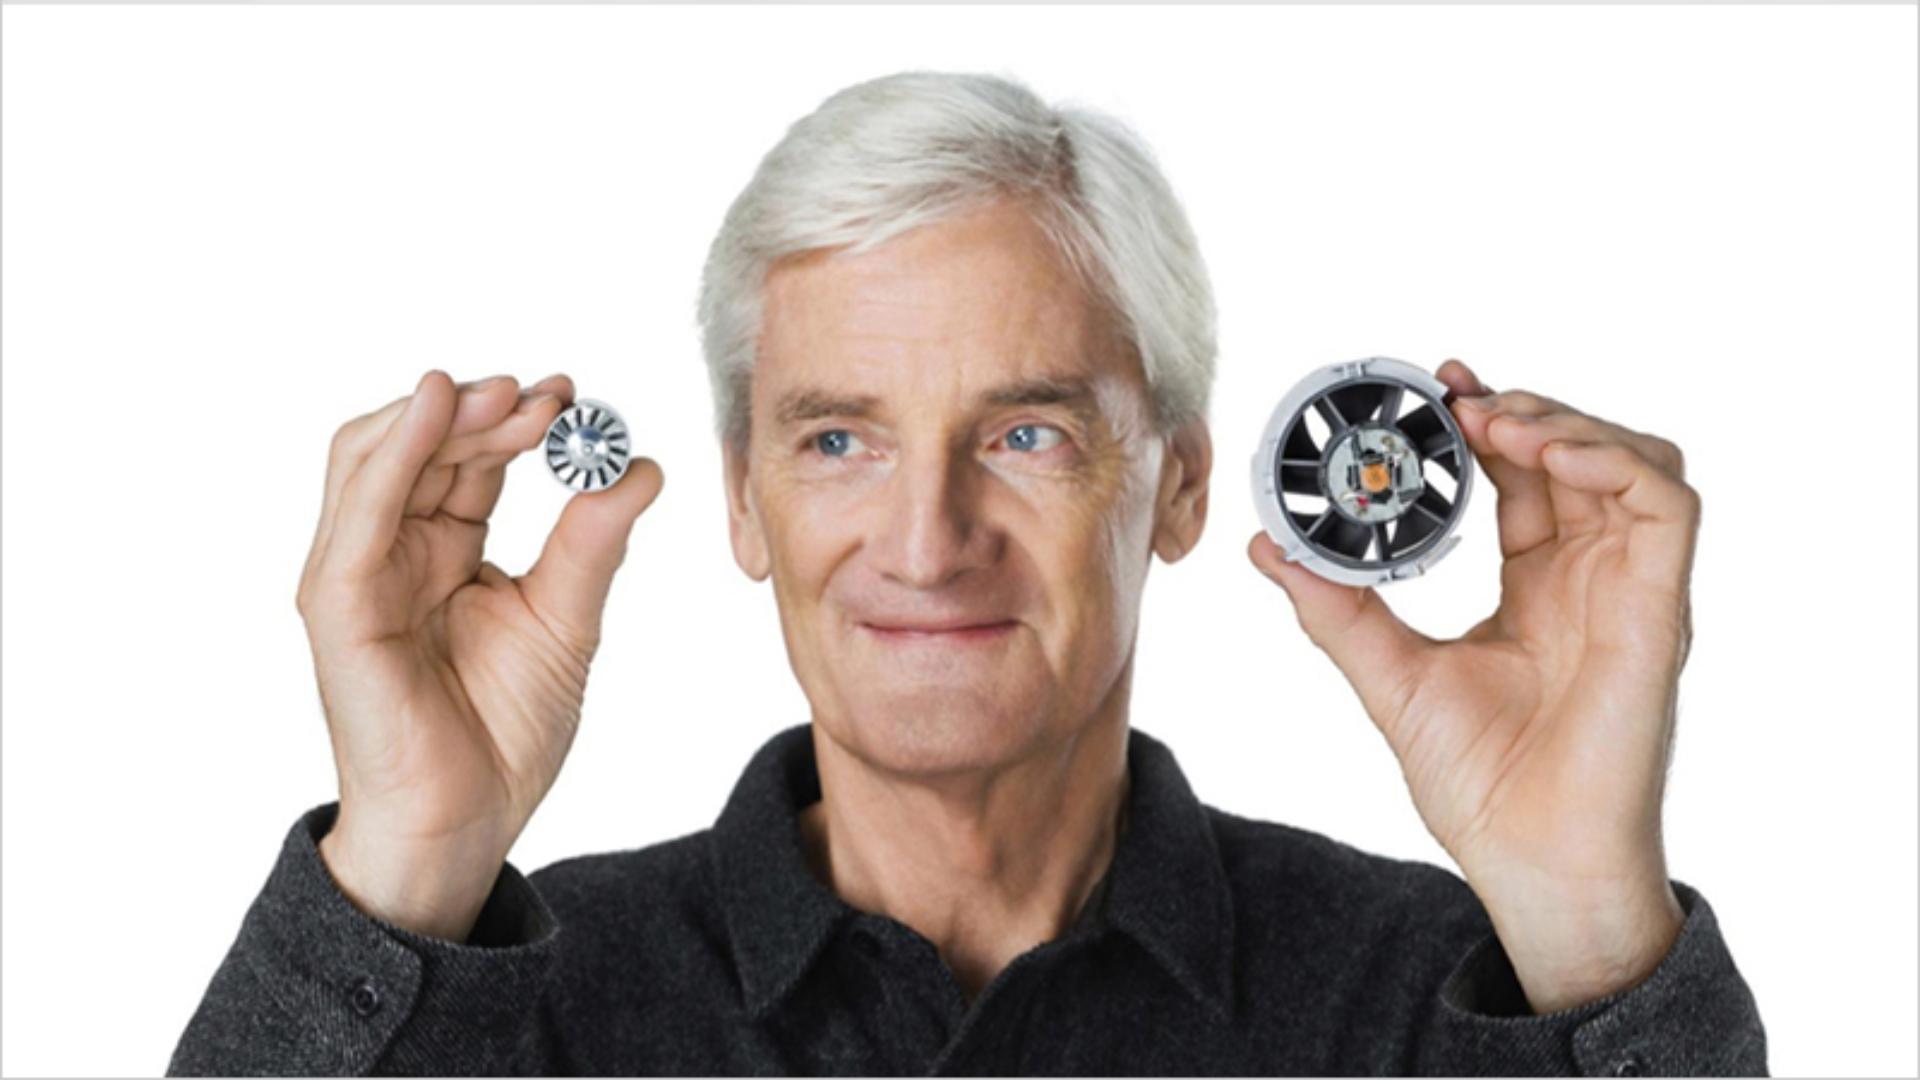 James Dyson holding the Dyson digital motor